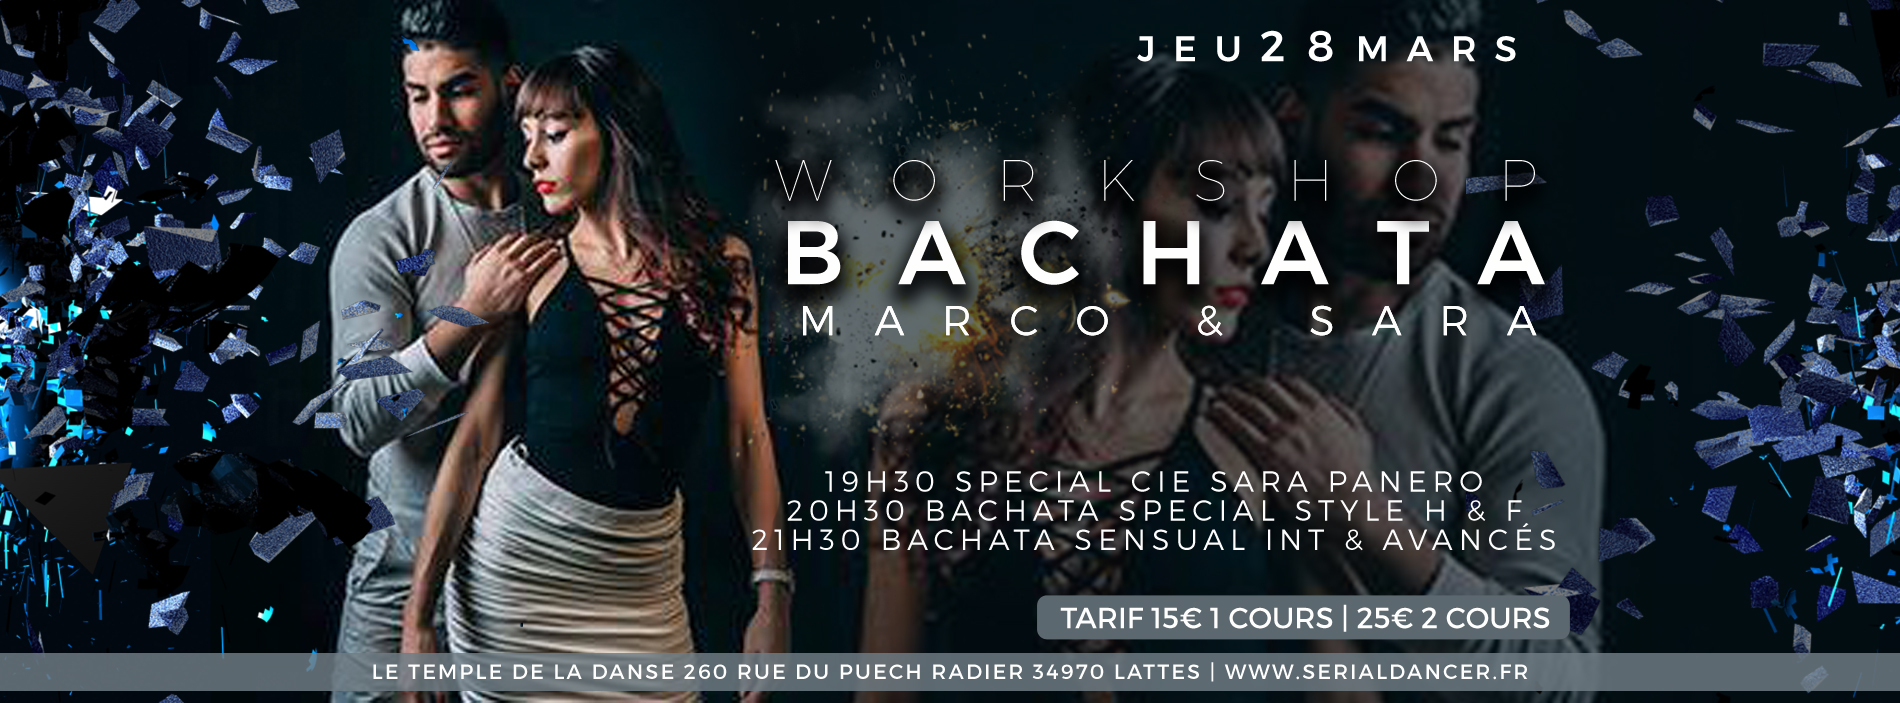 Jeu28mars – Stage Bachata – Marco & Sara